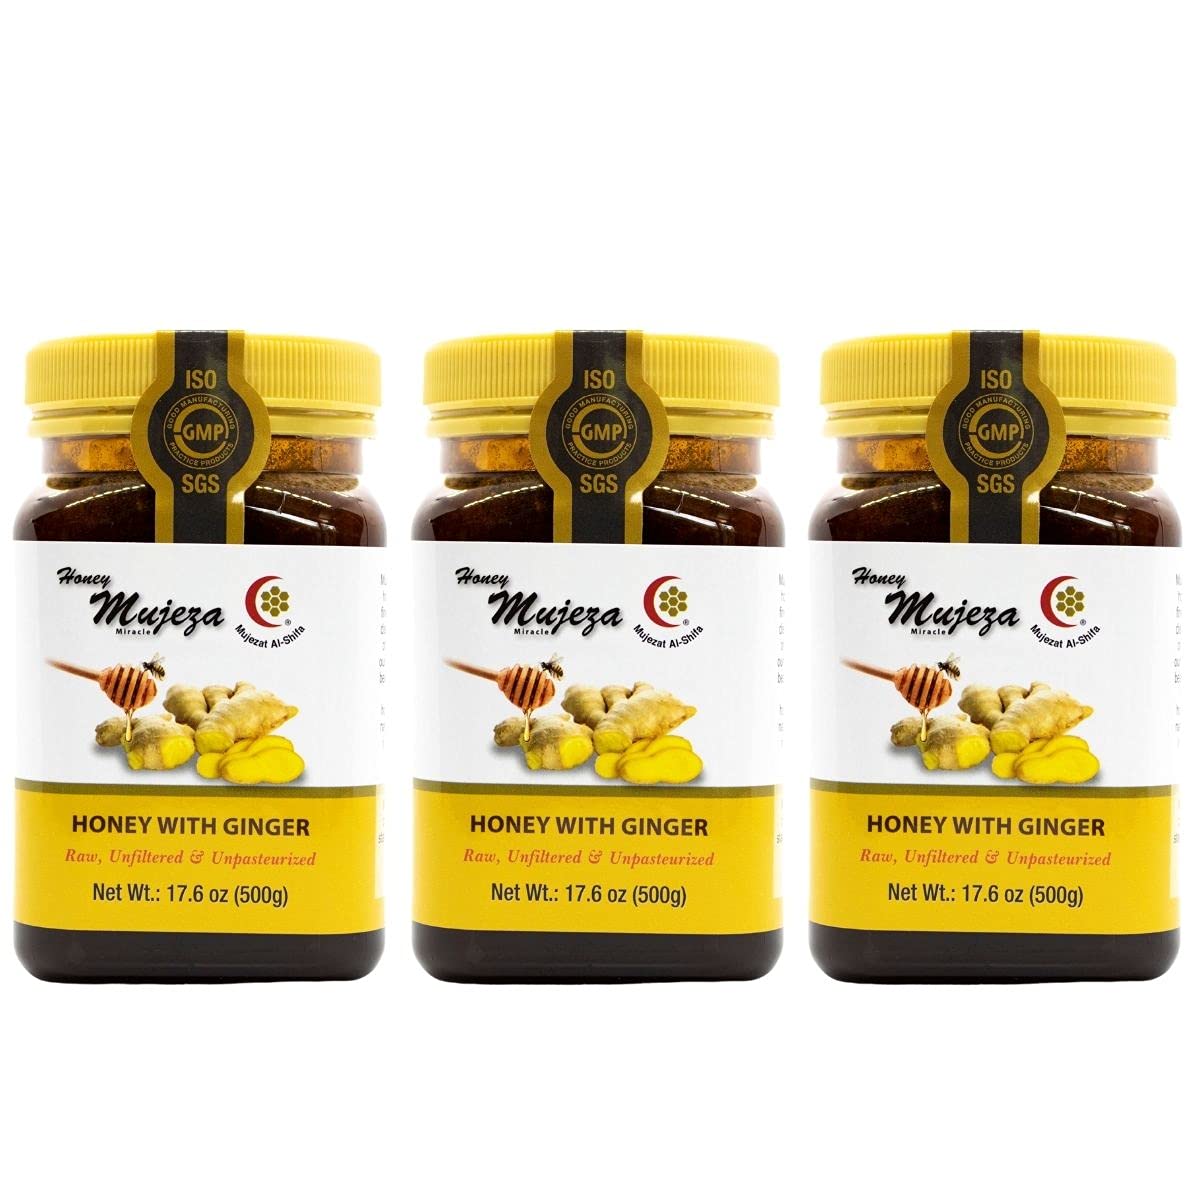 Mujeza Black Seed Honey with Fresh Ginger Juice, Unheated Unfiltered Unprocessed 100% Natural Raw Liquid Honey SAVE $11 ON BIGGER SIZES (250g / 8.8oz) - Mujezat Al Shifa